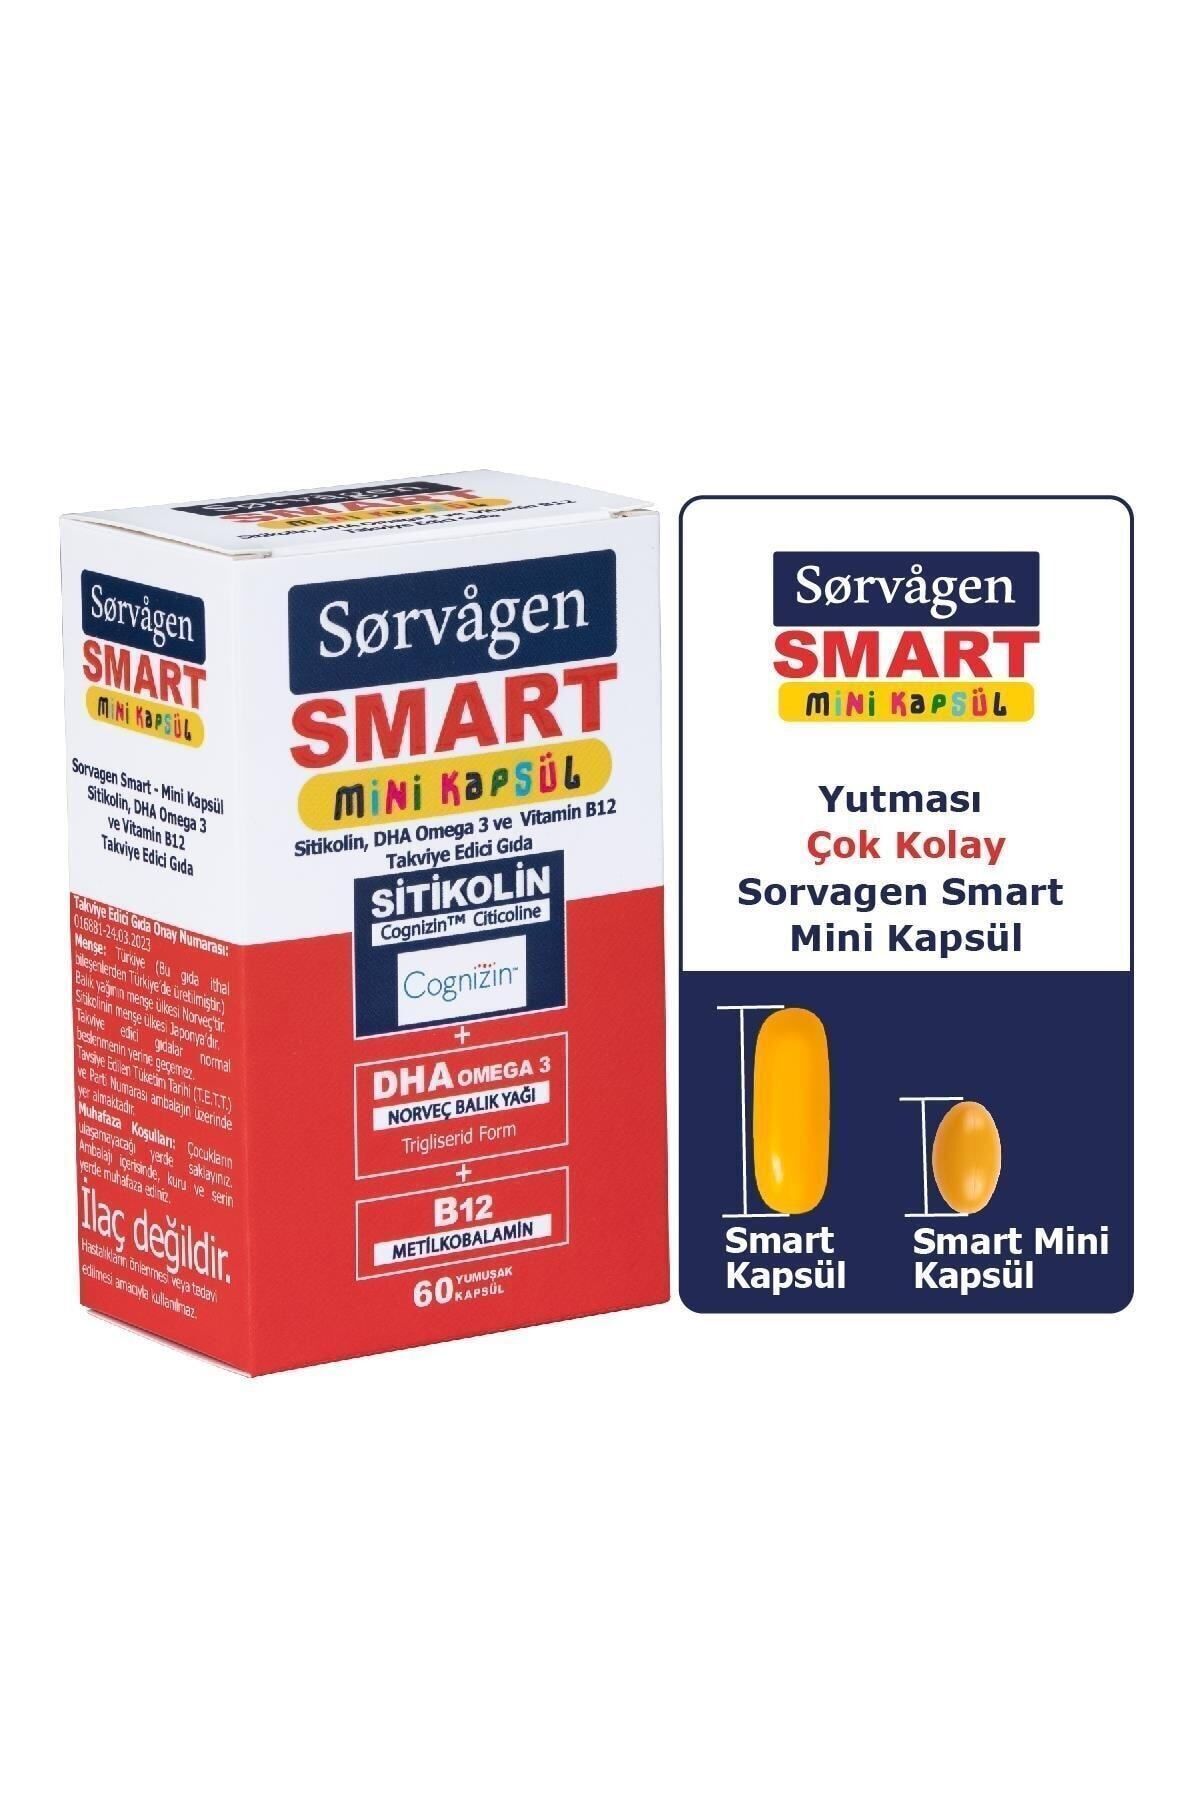 Sorvagen Smart Mini Kapsül Sitikolin, Dha Omega 3 Ve B12 - 60 Kapsül